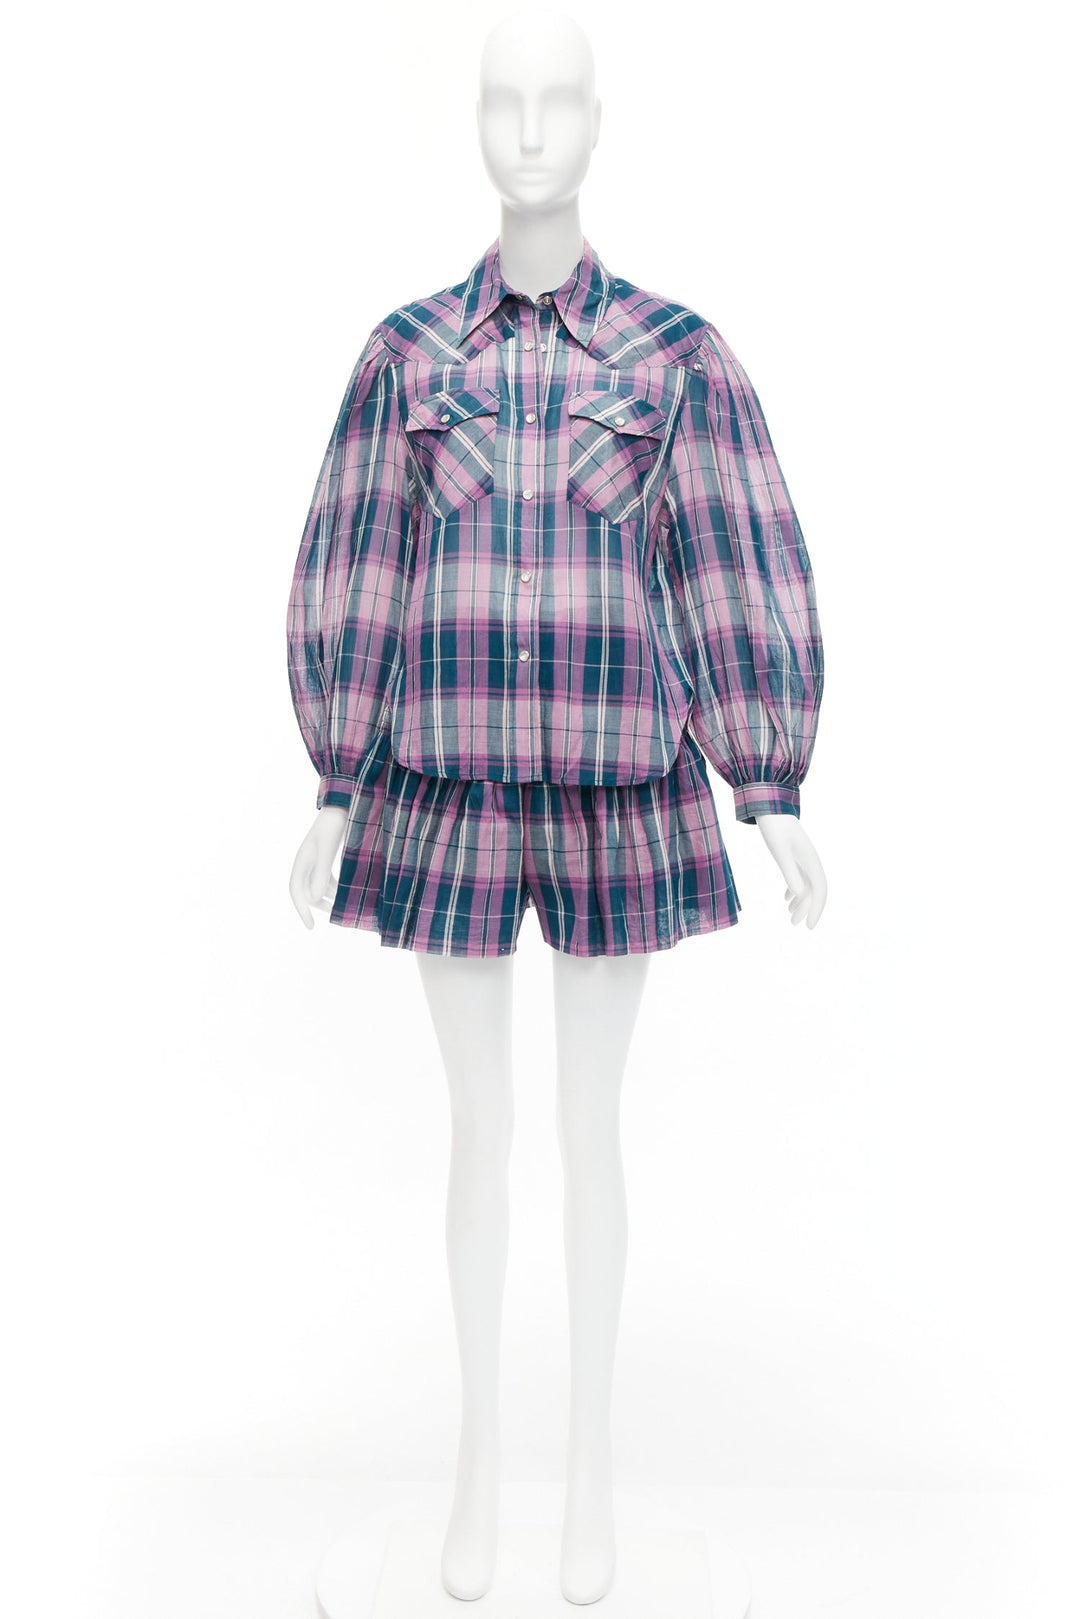 ISABEL MARANT ETOILE Bethany purple cotton check top FR34 XS shorts FR36 S set